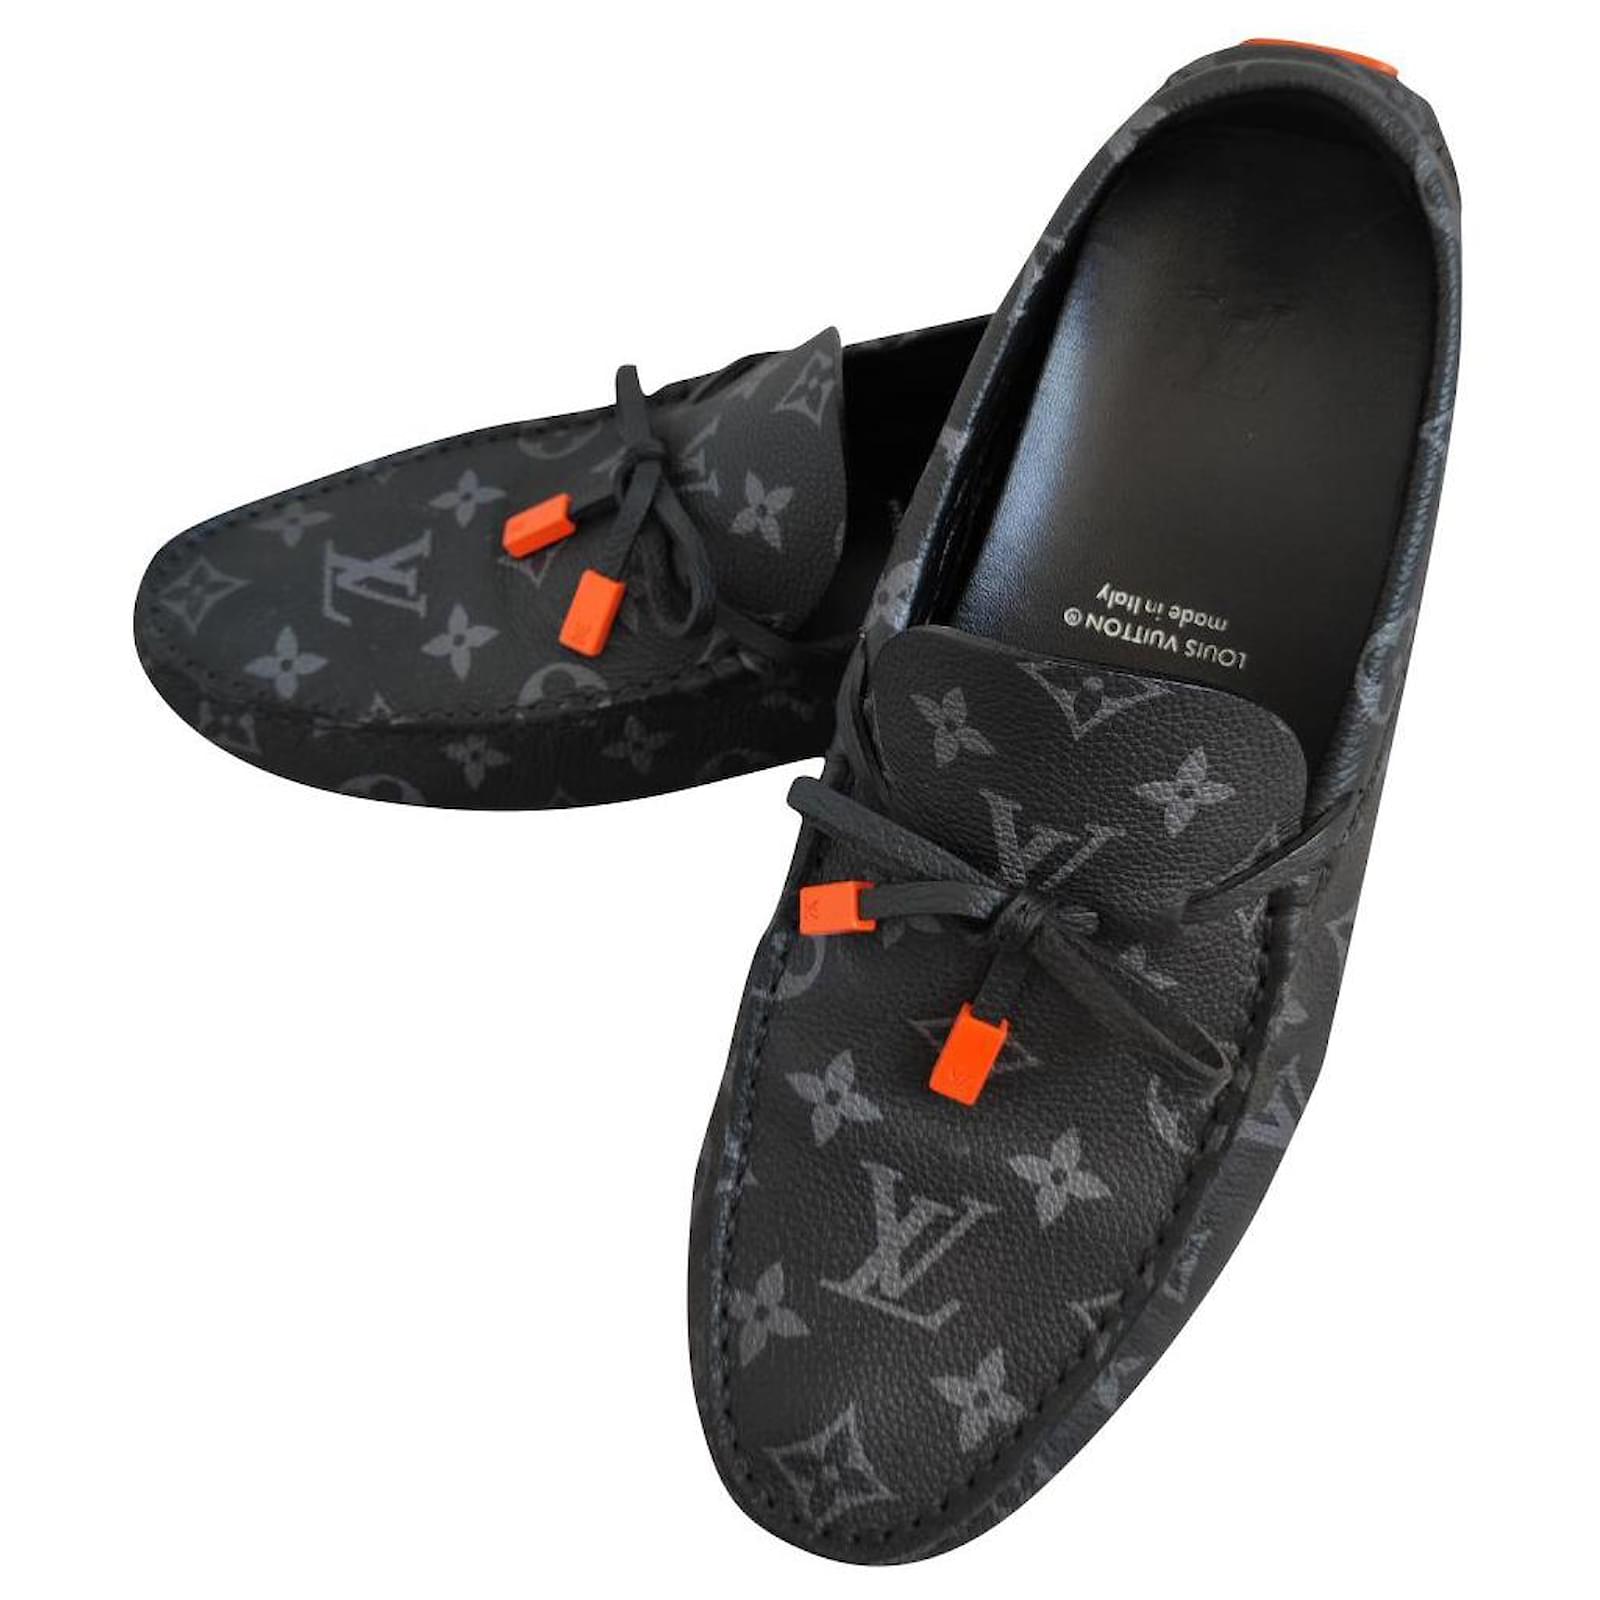 Louis Vuitton Mens US 9 Black Damier Sparkle Slip on Loafer Dress Shoe 1LV3L17